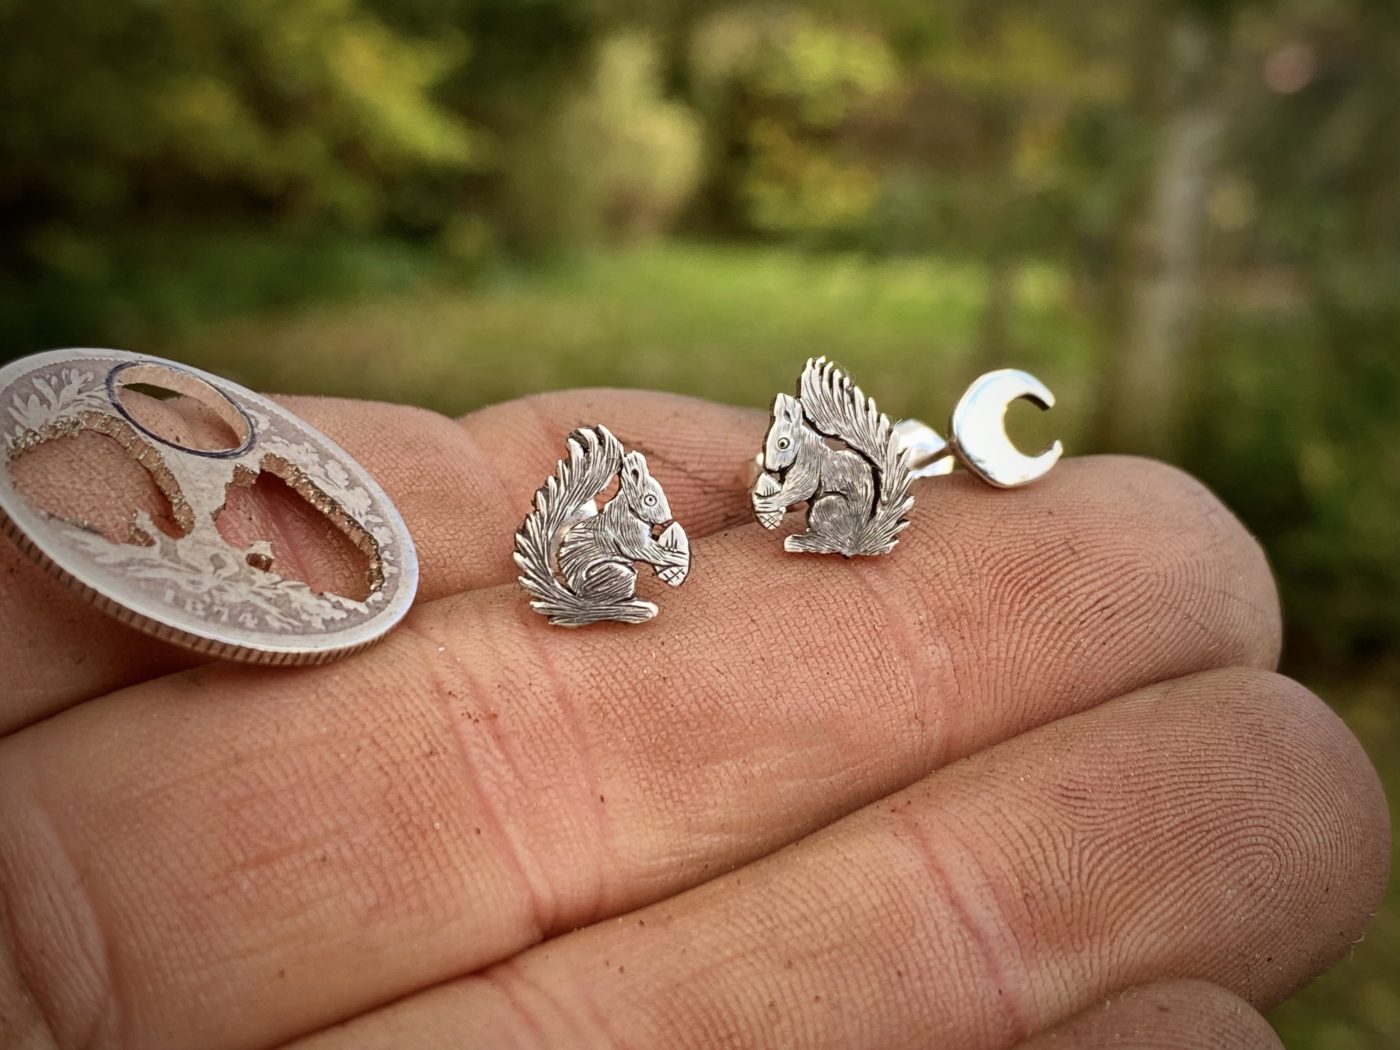 Squirrel silver jewellery handcrafted in Cambridge, England